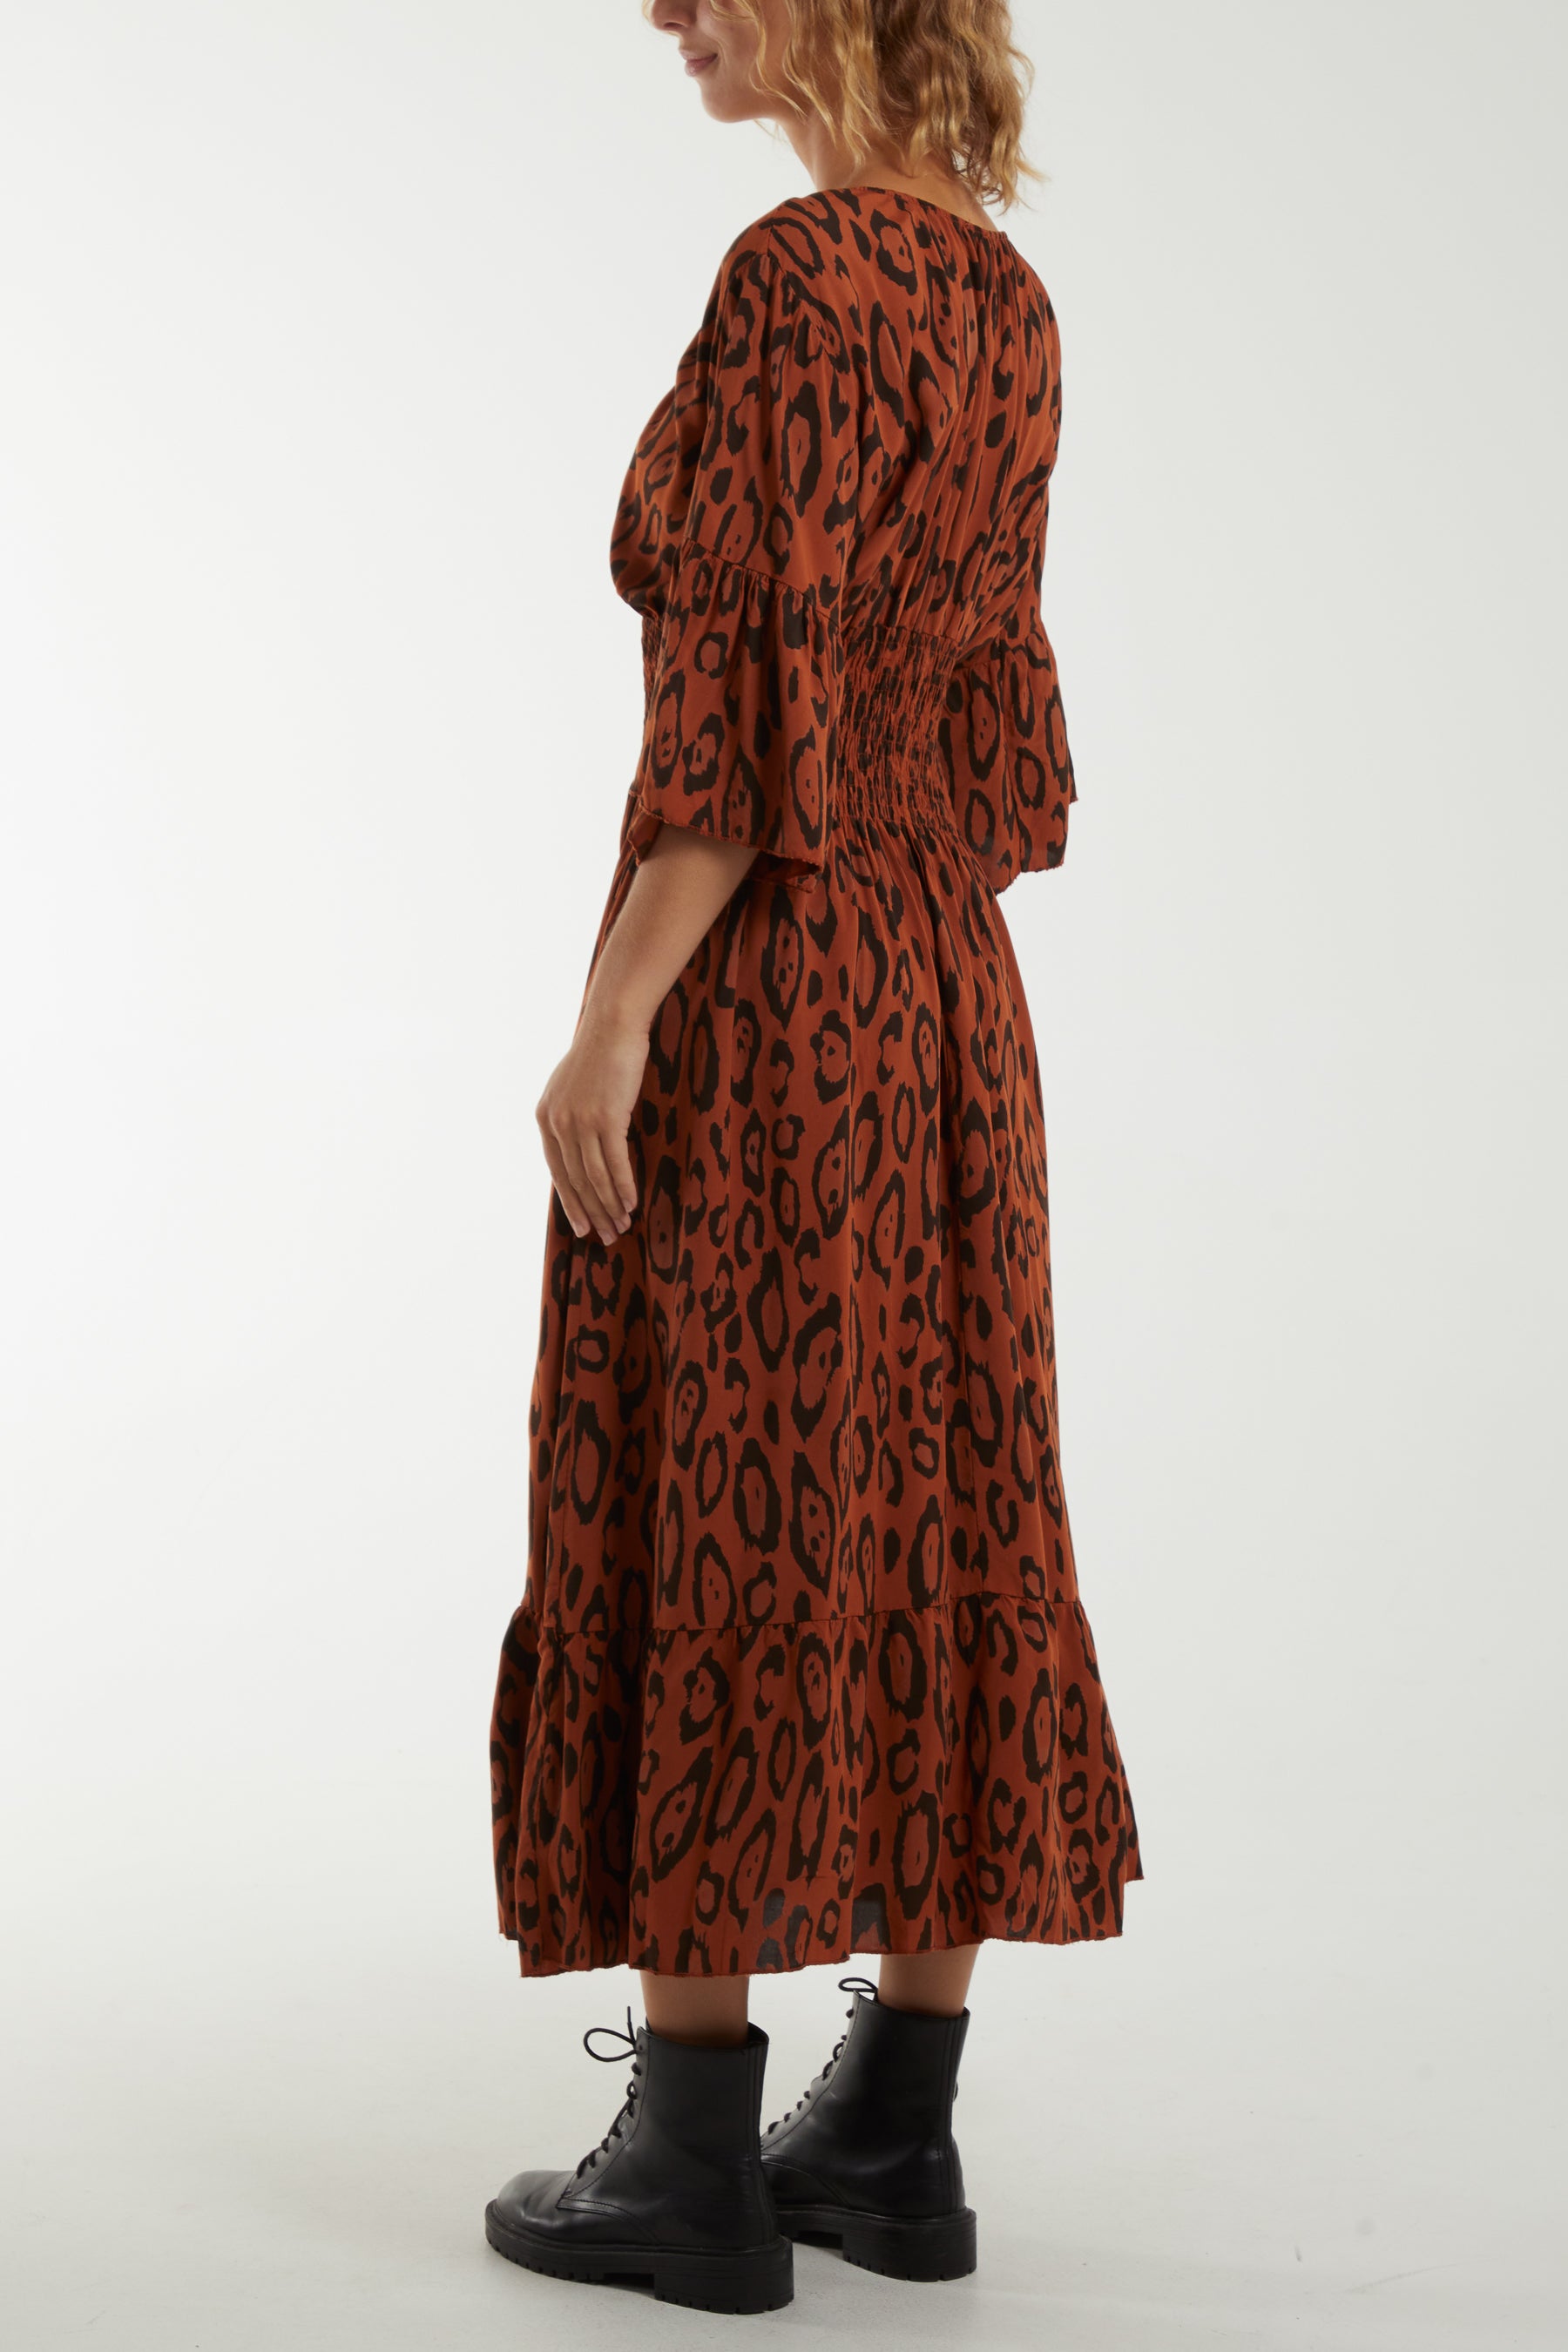 Leopard Shirred Bodice Maxi Dress